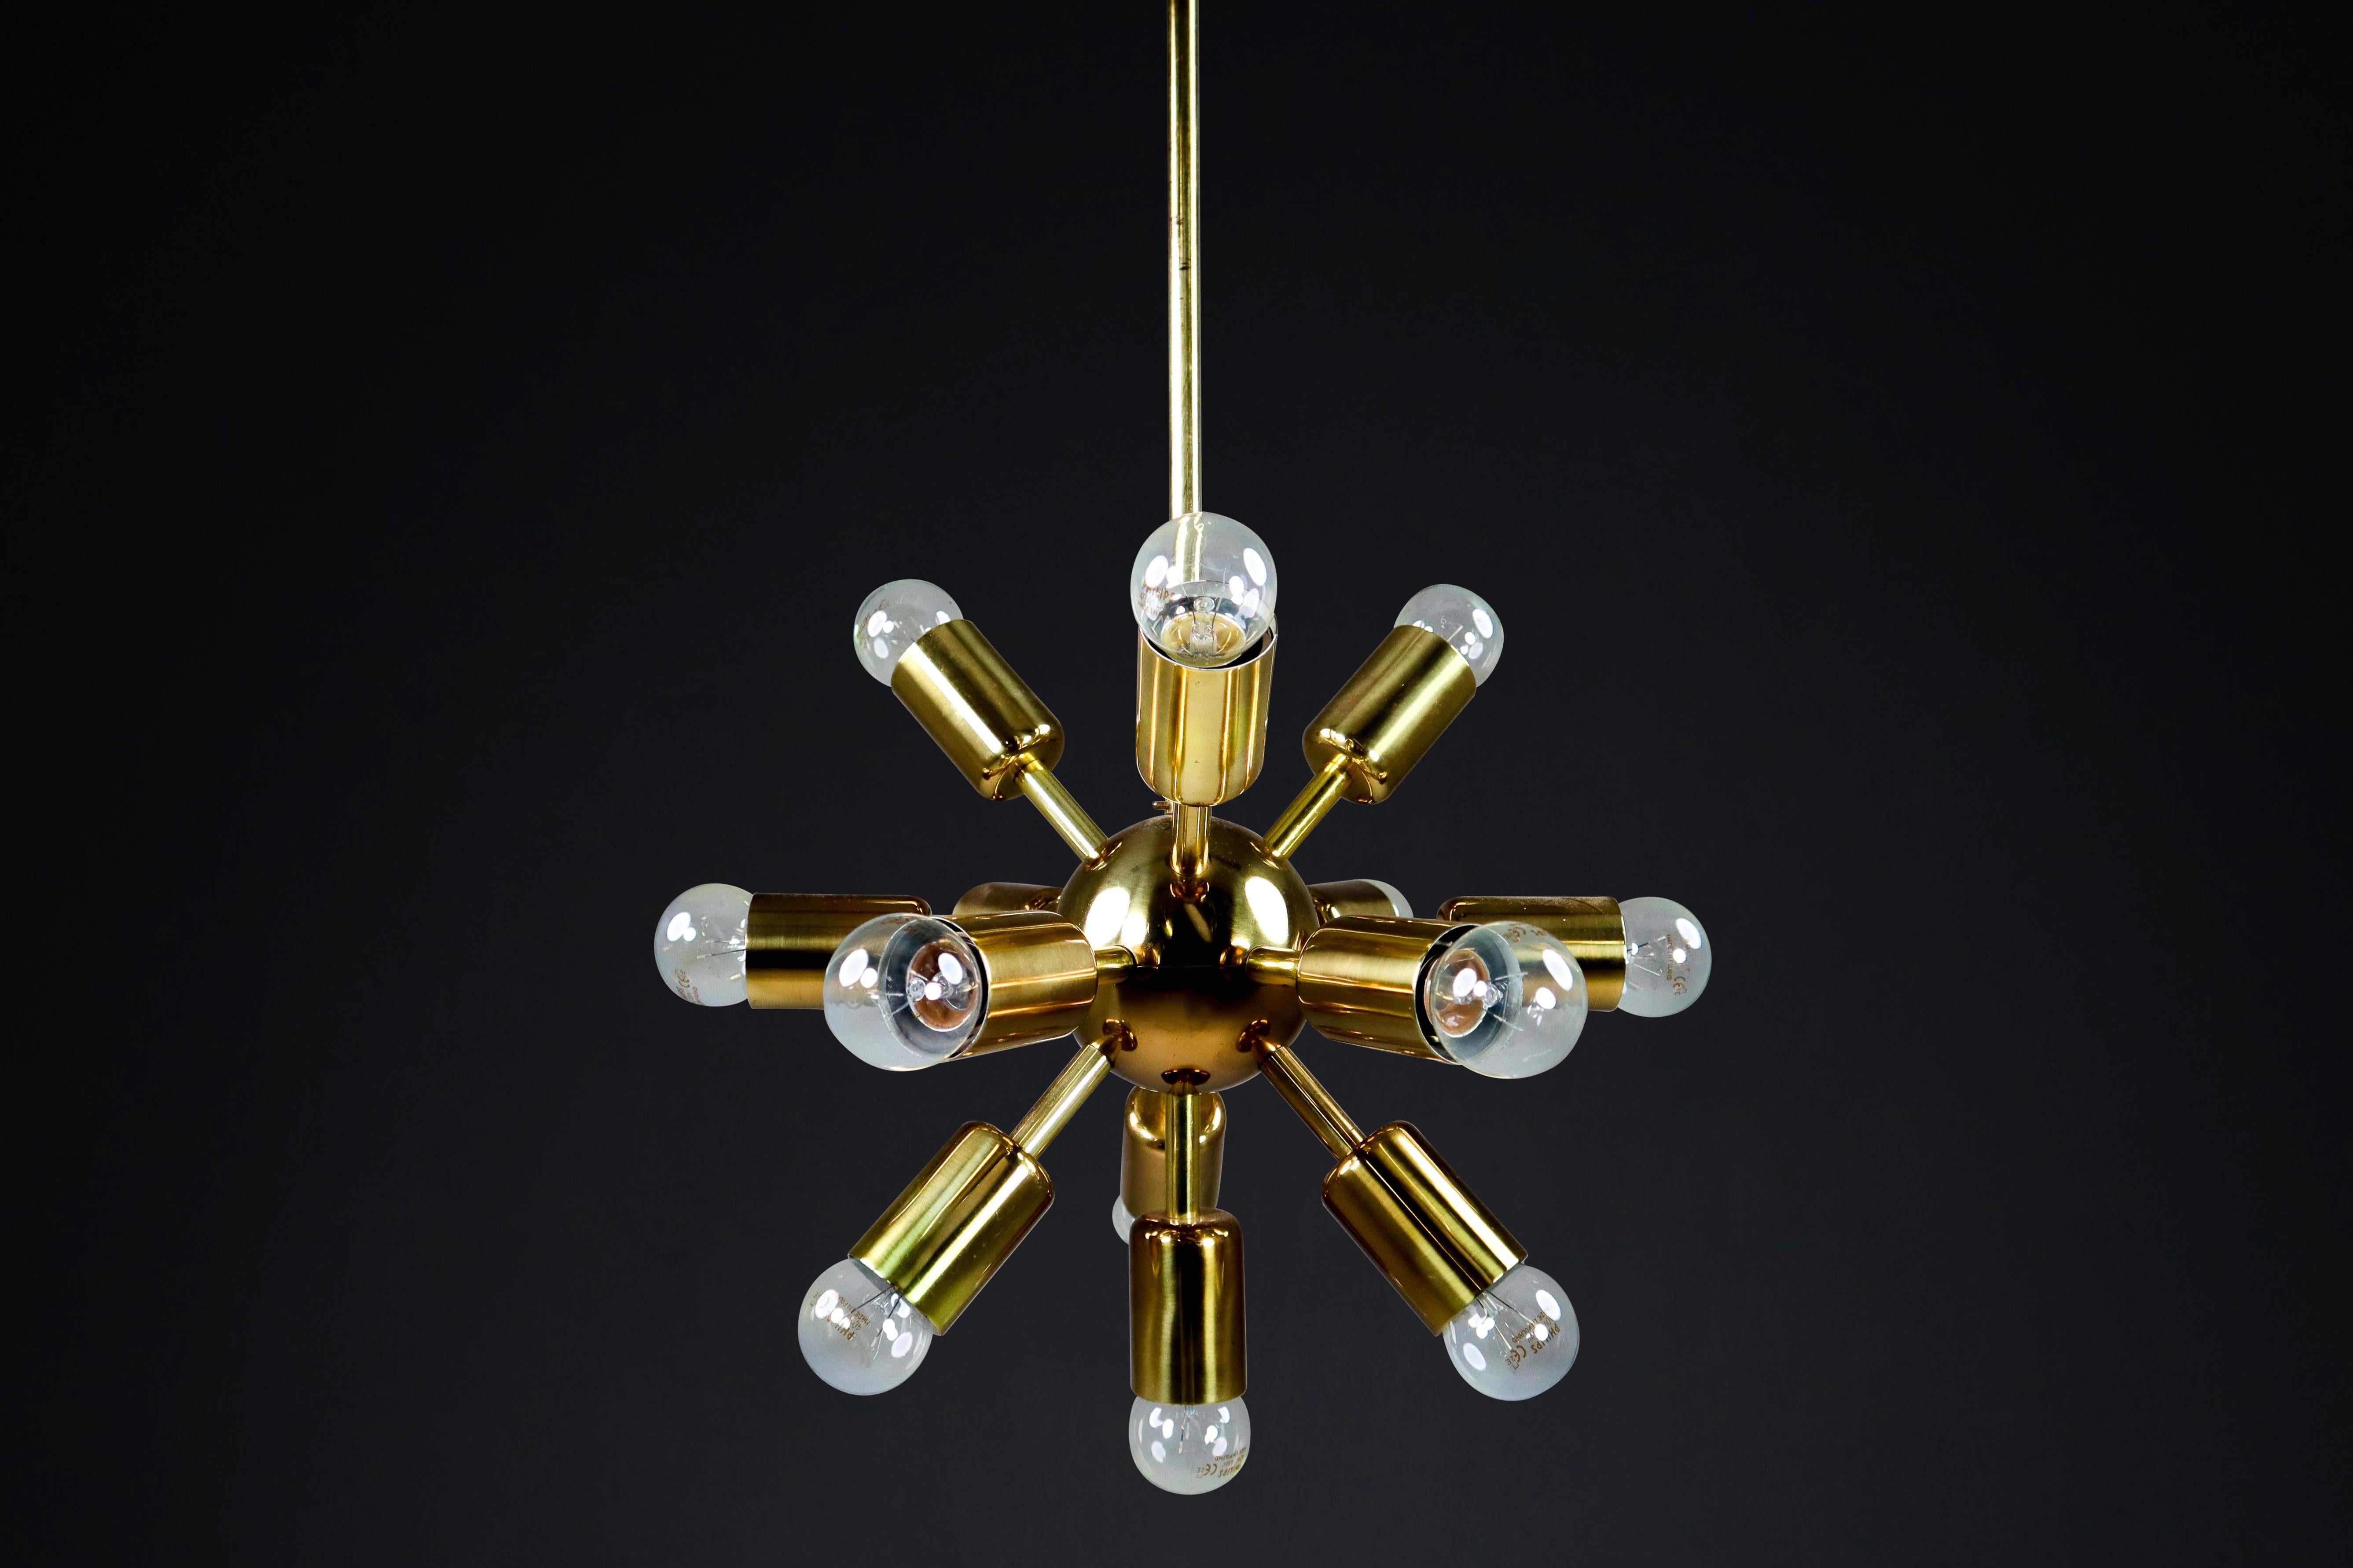 Mid-Century Modern Midcentury Brass Sputnik Chandeliers with Twelve Lights by Drupol, Praque 1960s For Sale